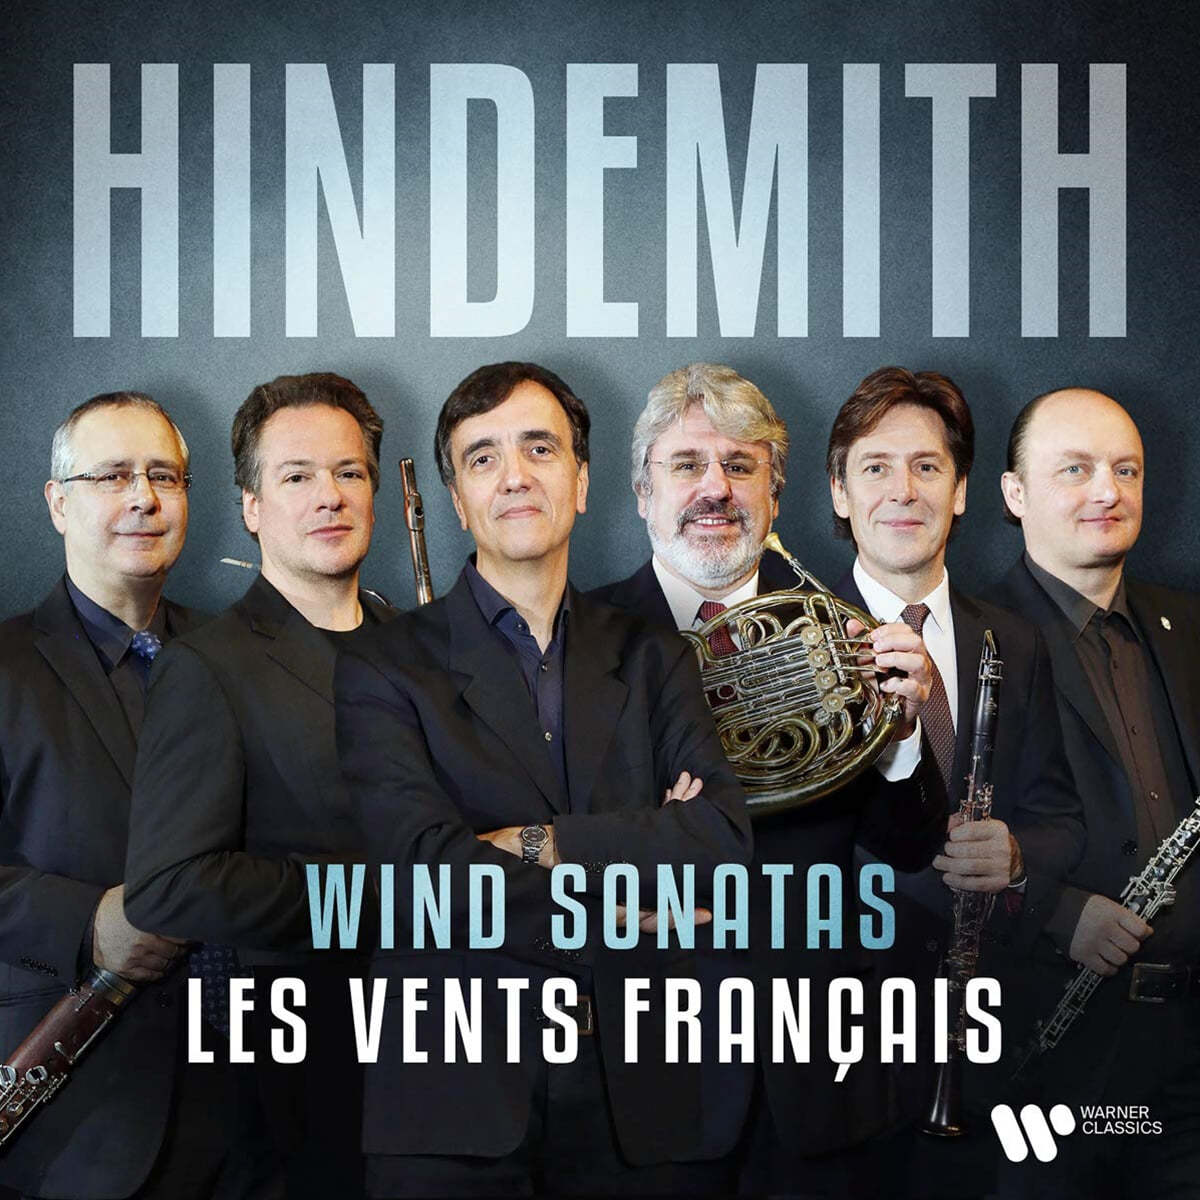 Les Vents Francais 힌데미트: 목관 소나타 (Hindemith: Wind Sonatas) 